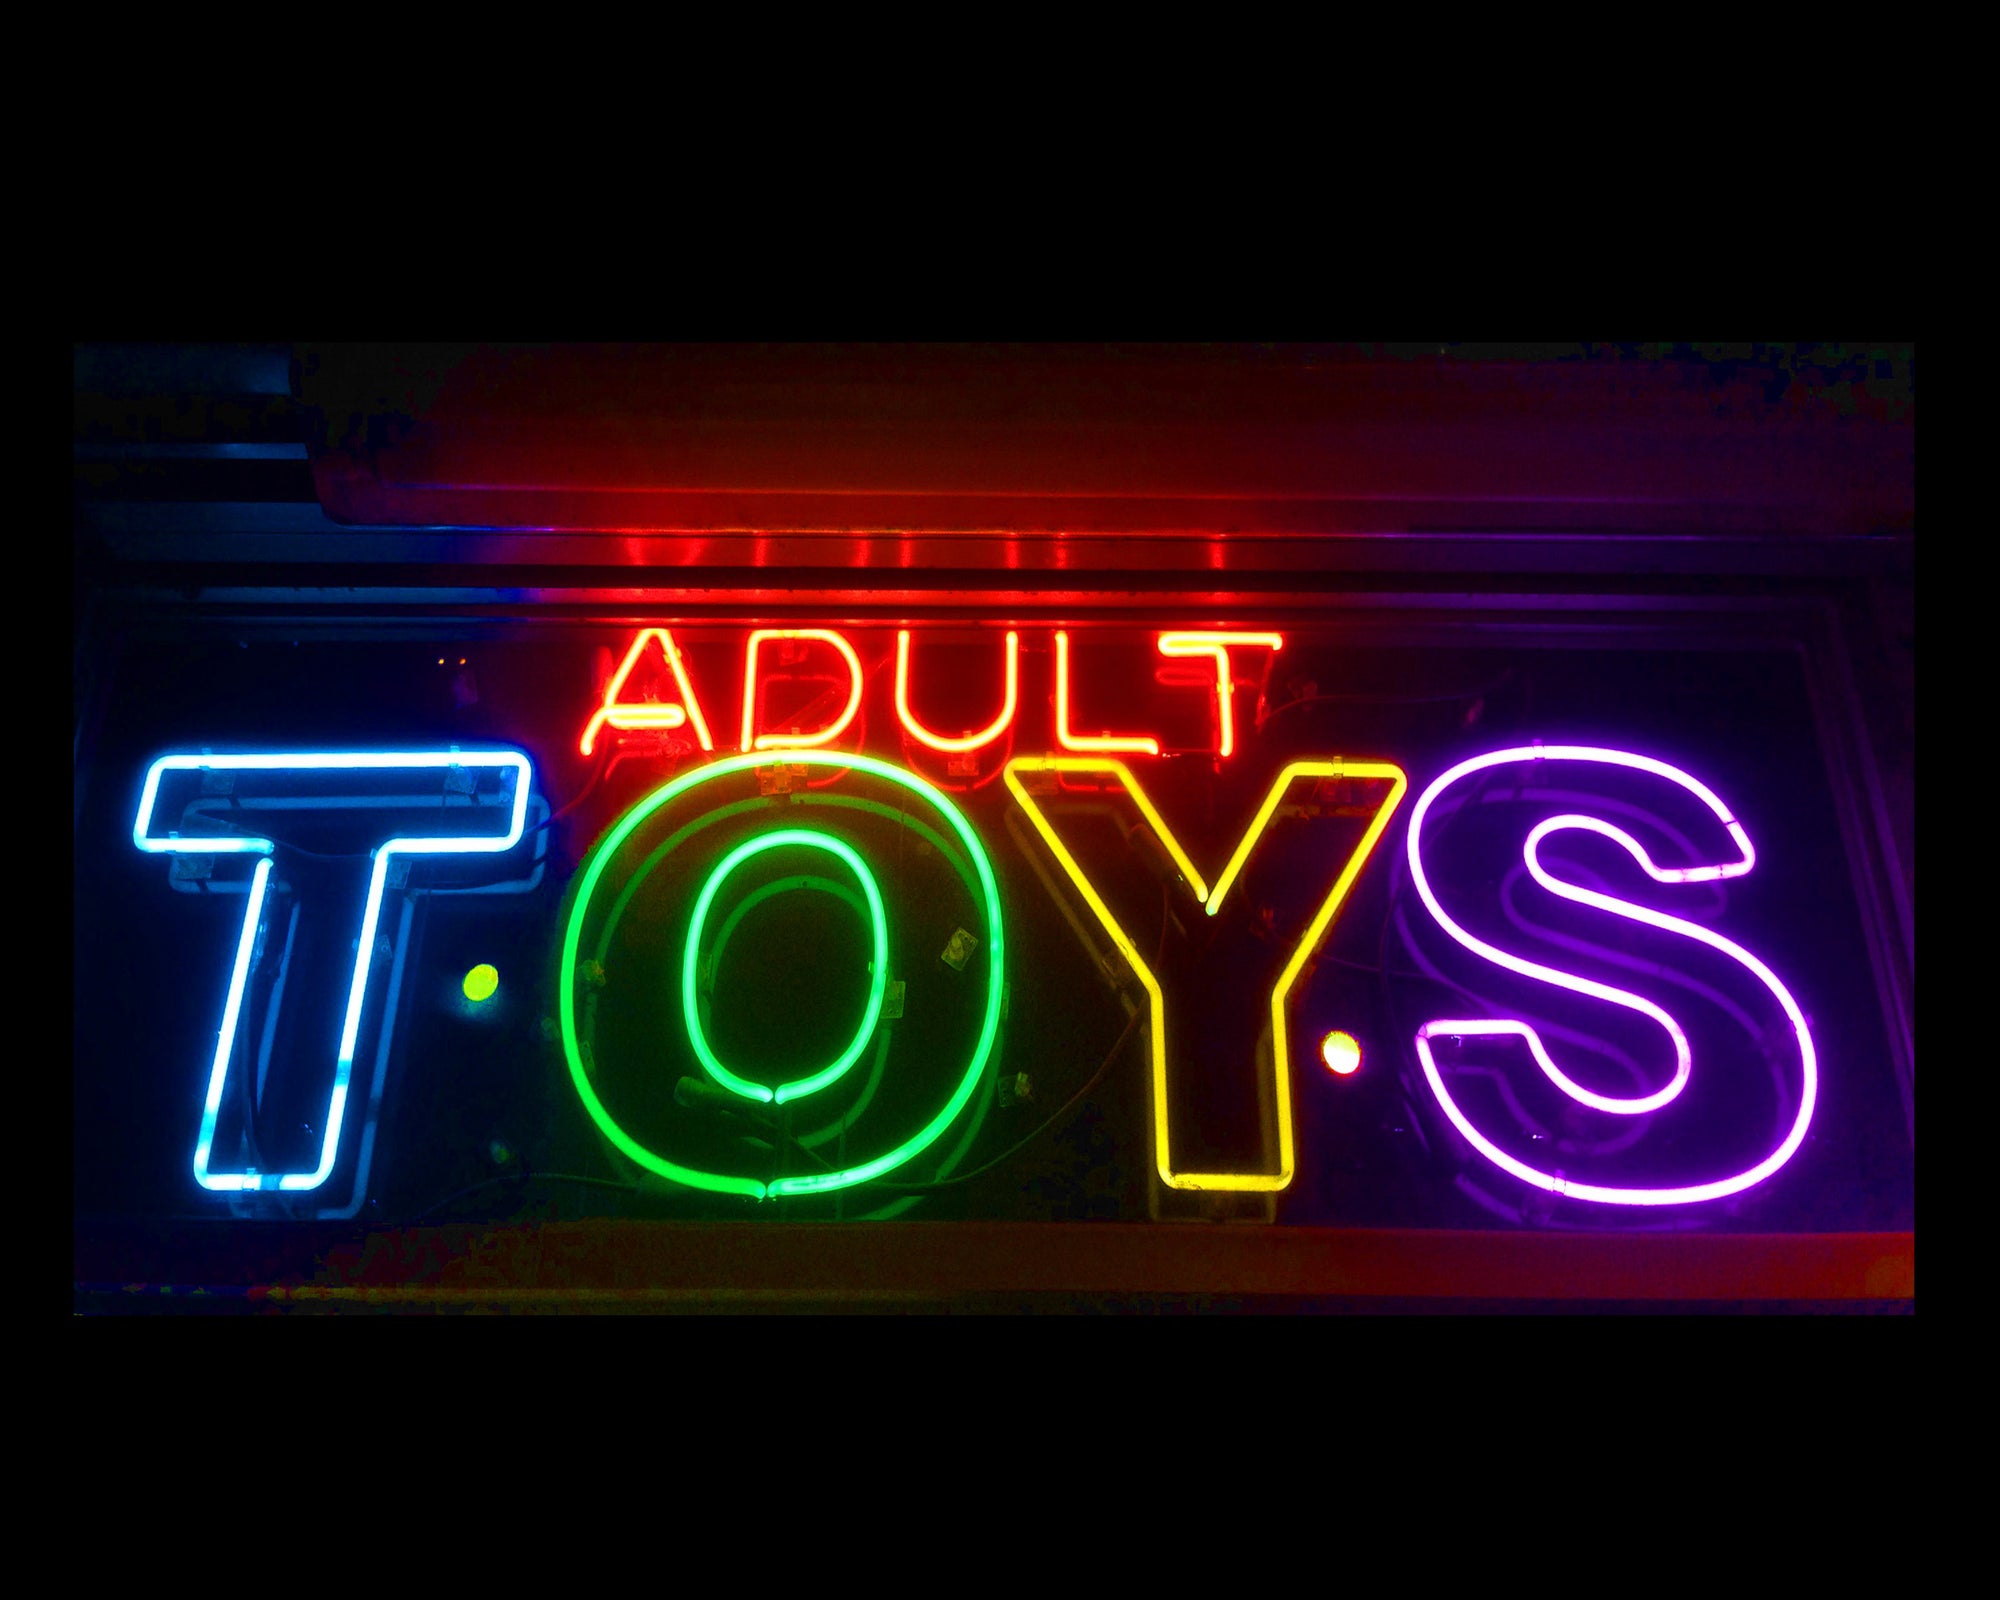 Adult Toys, New York, 2017